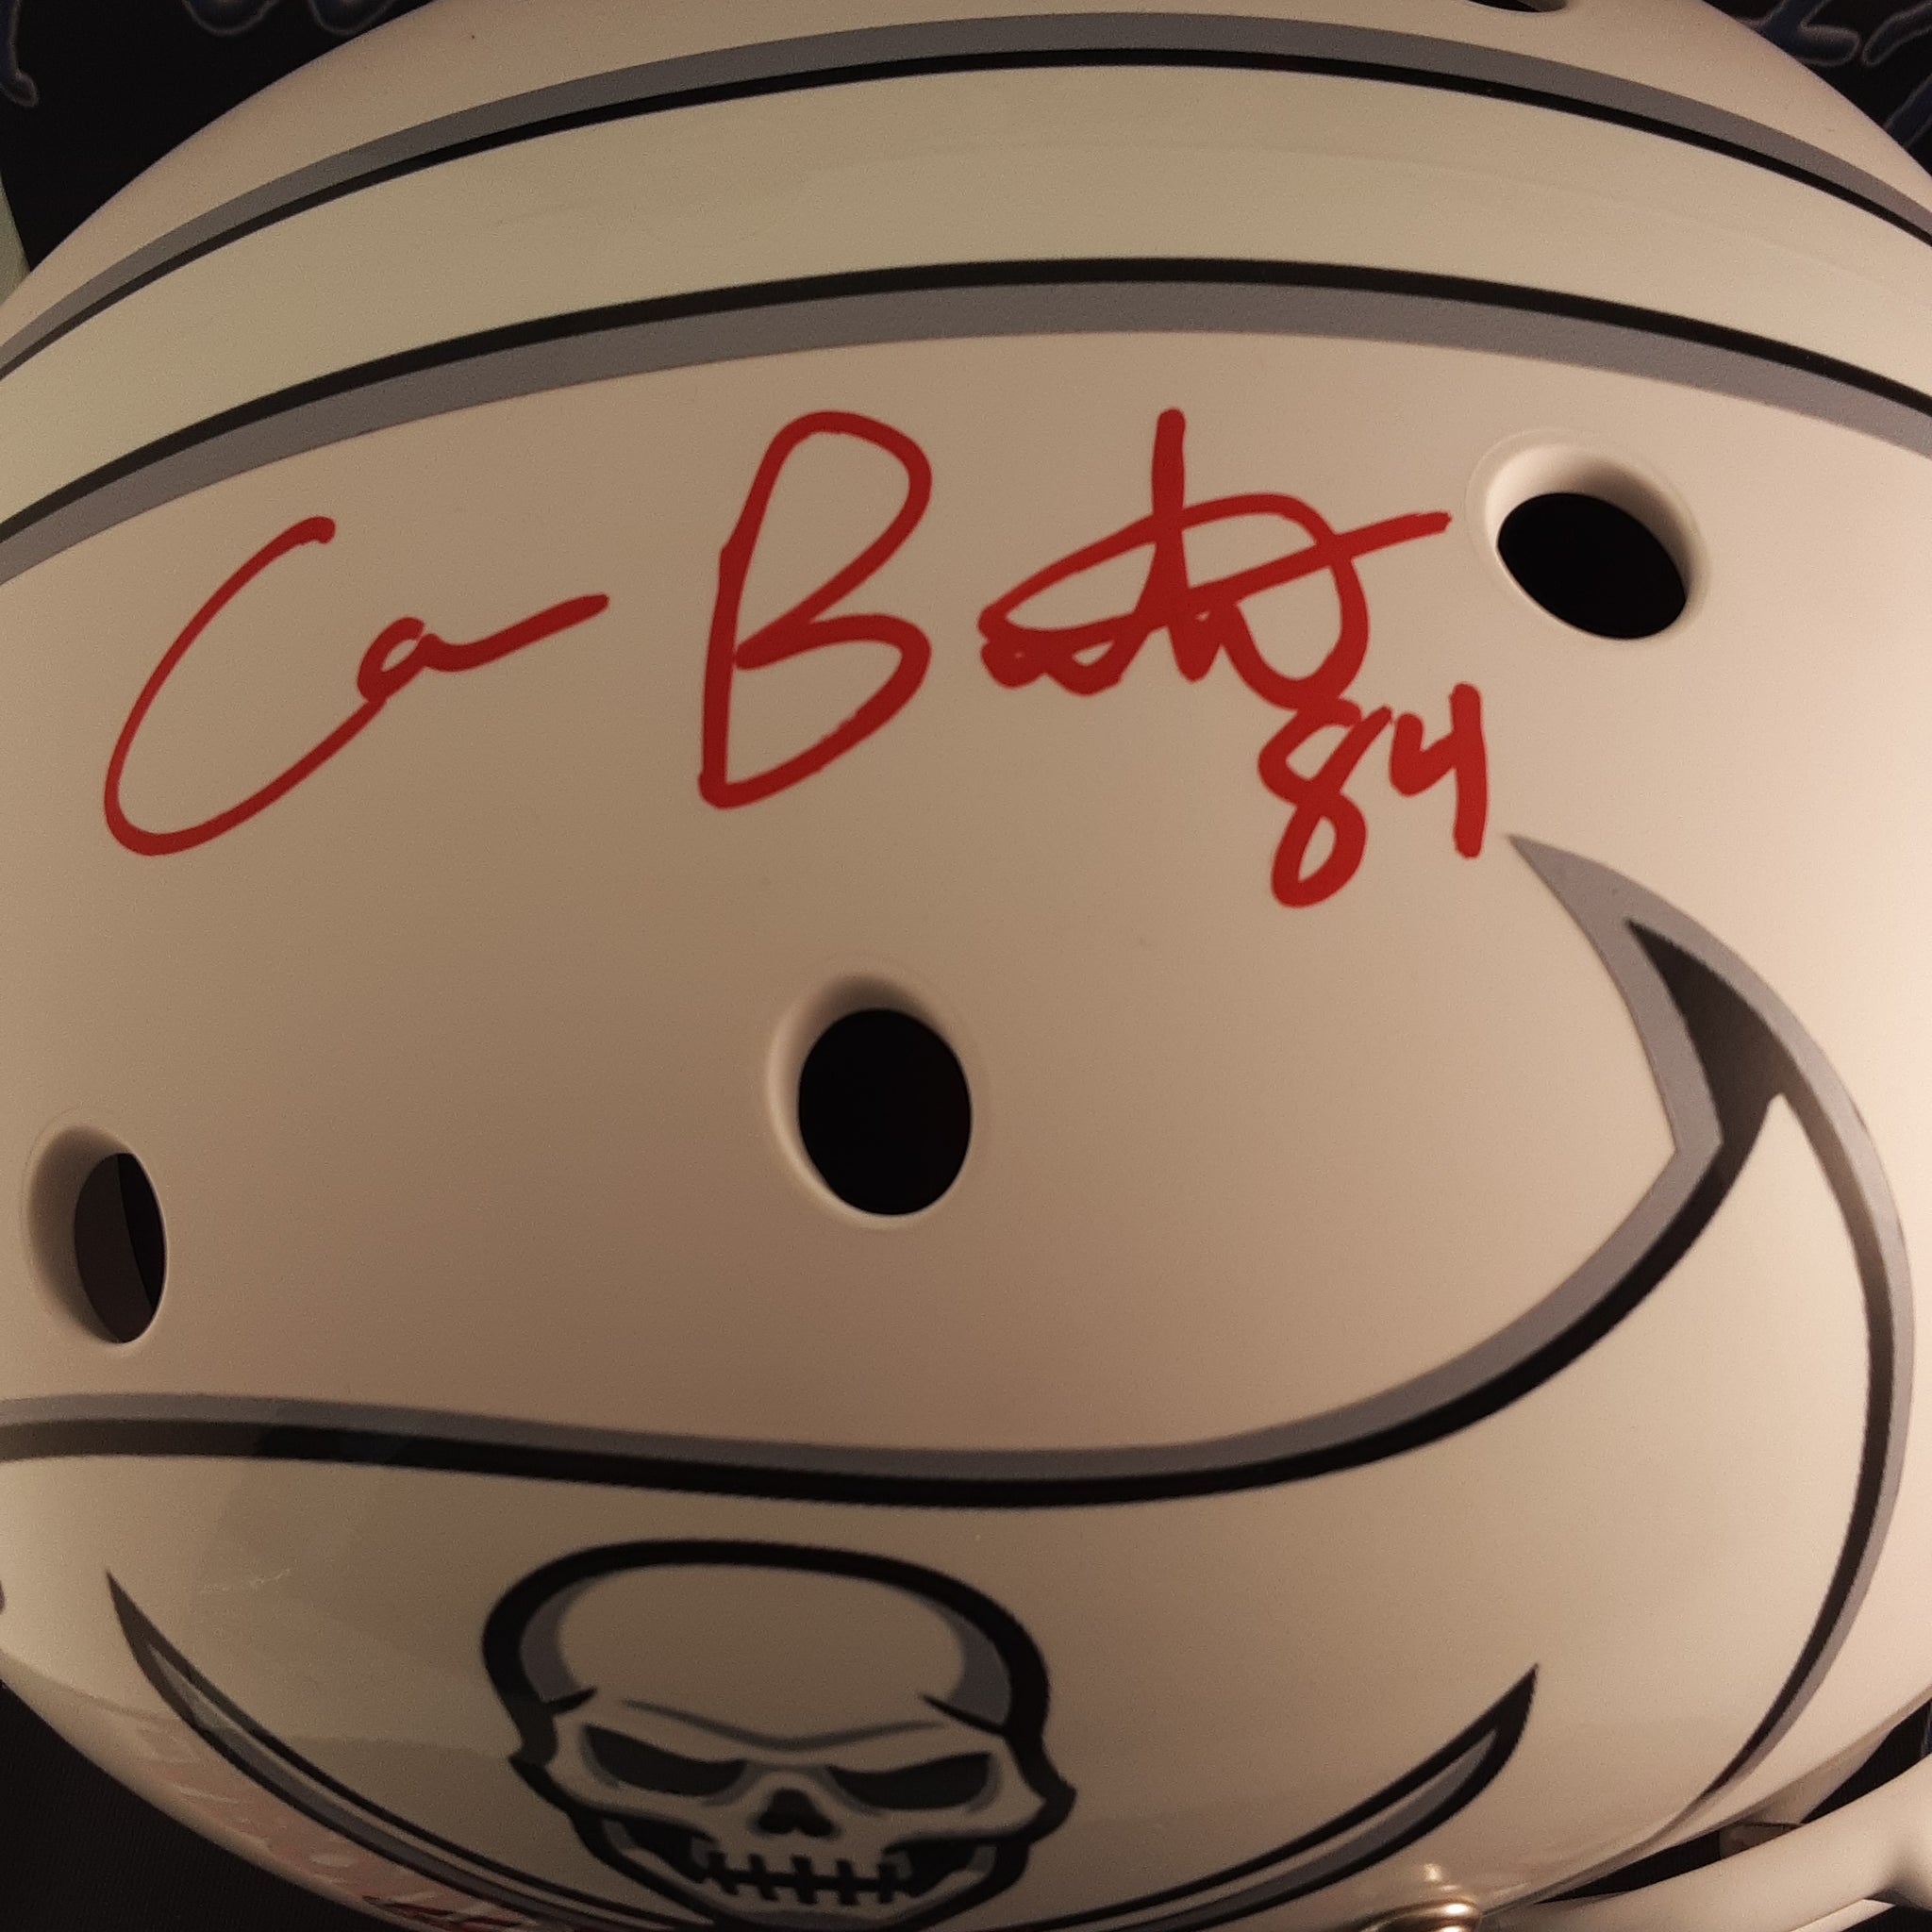 Cameron Brate Adam Humphries Authentic Signed Autographed Full-size Replica Helmet PSA